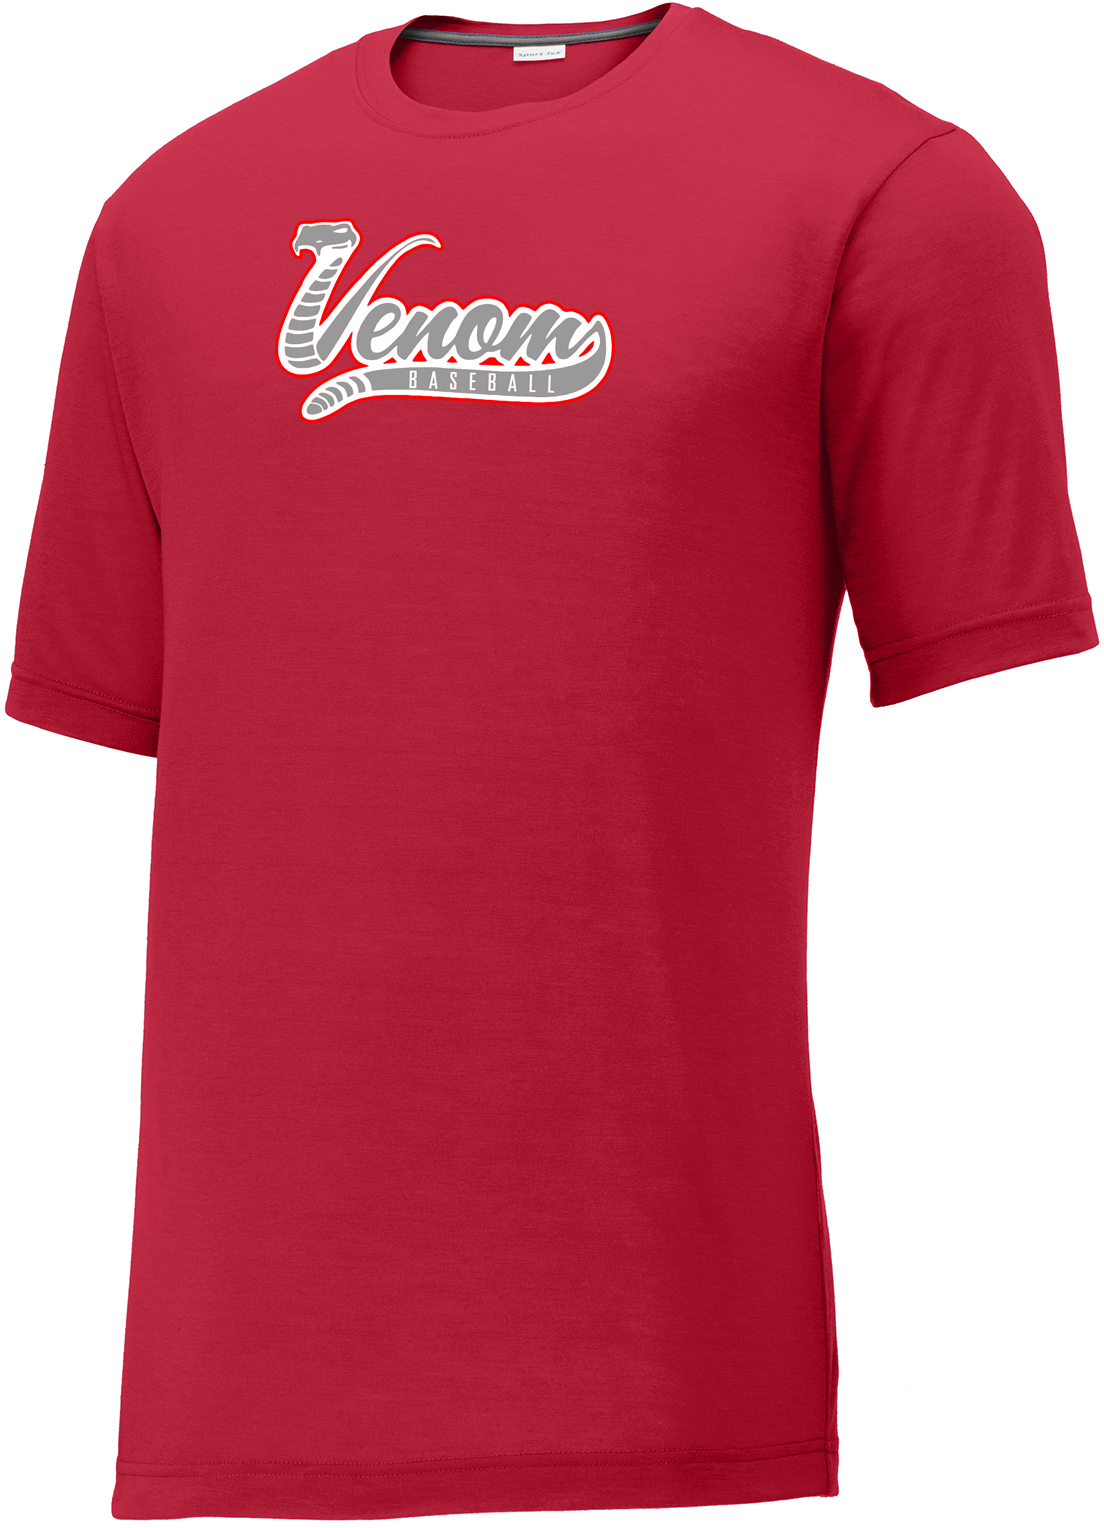 Valley Venom Baseball CottonTouch Performance T-Shirt